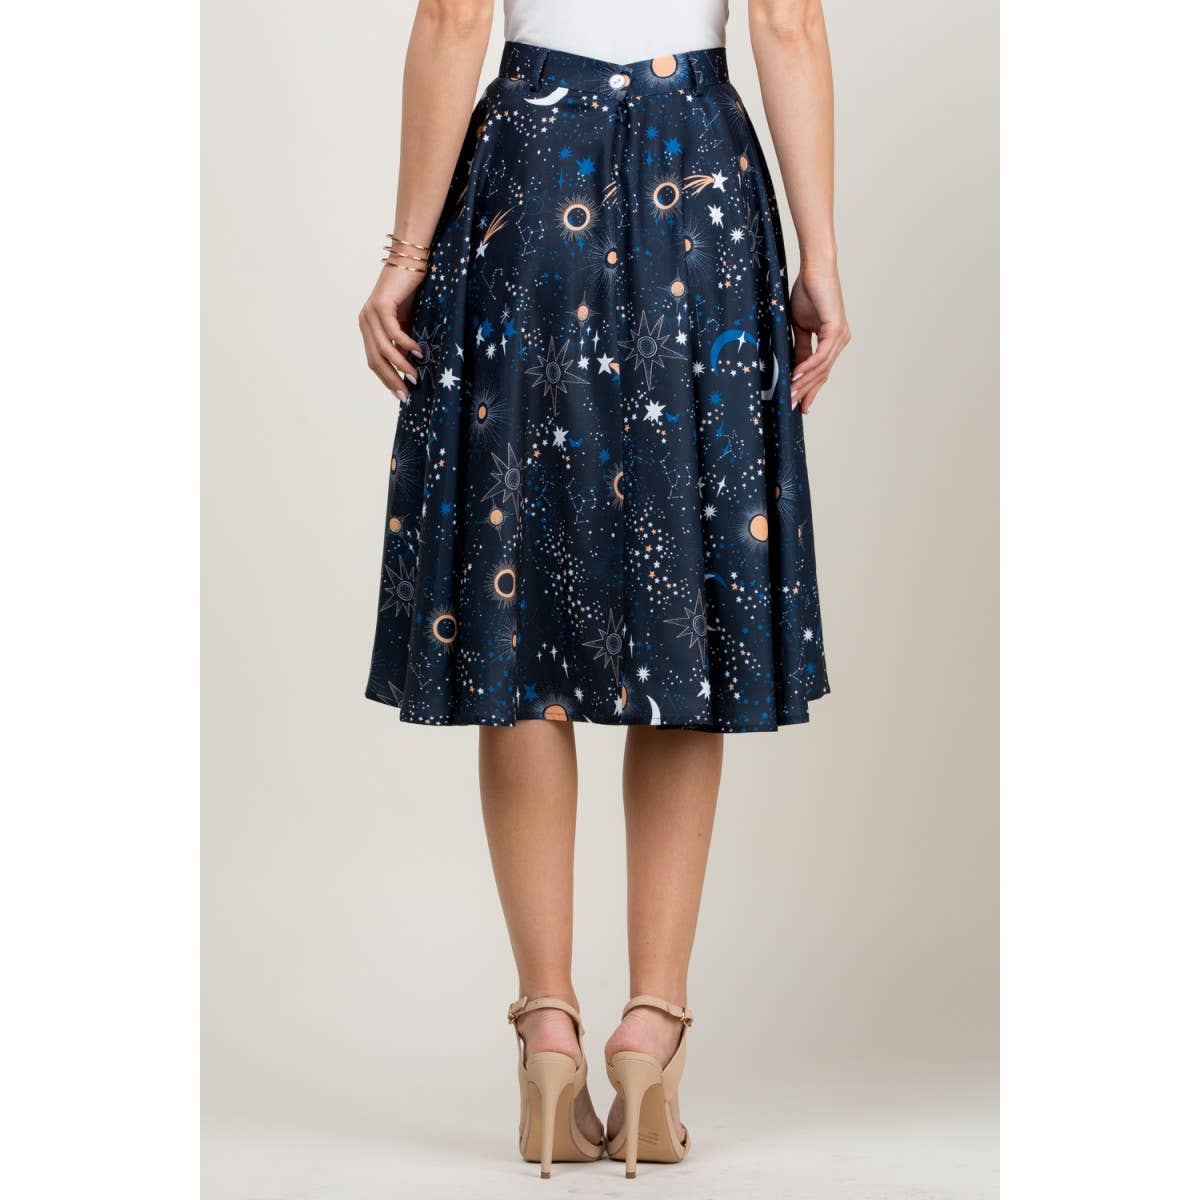 Galaxy Print Skirt